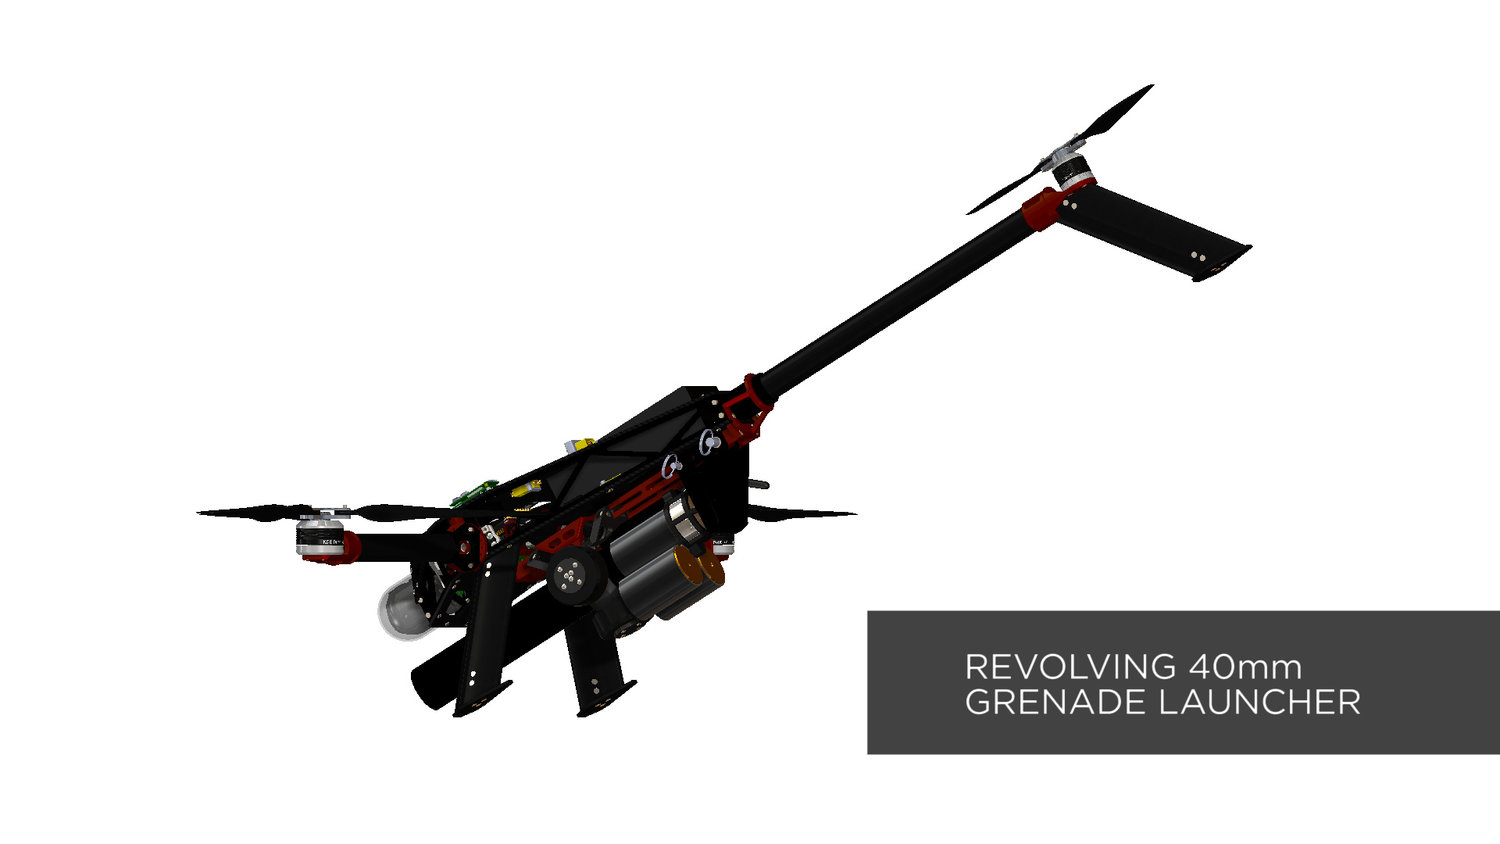 skyborne-cerberus-gl-revolving-grenade-launcher-3c880700aac1737131141b8ab3e95b27.jpg